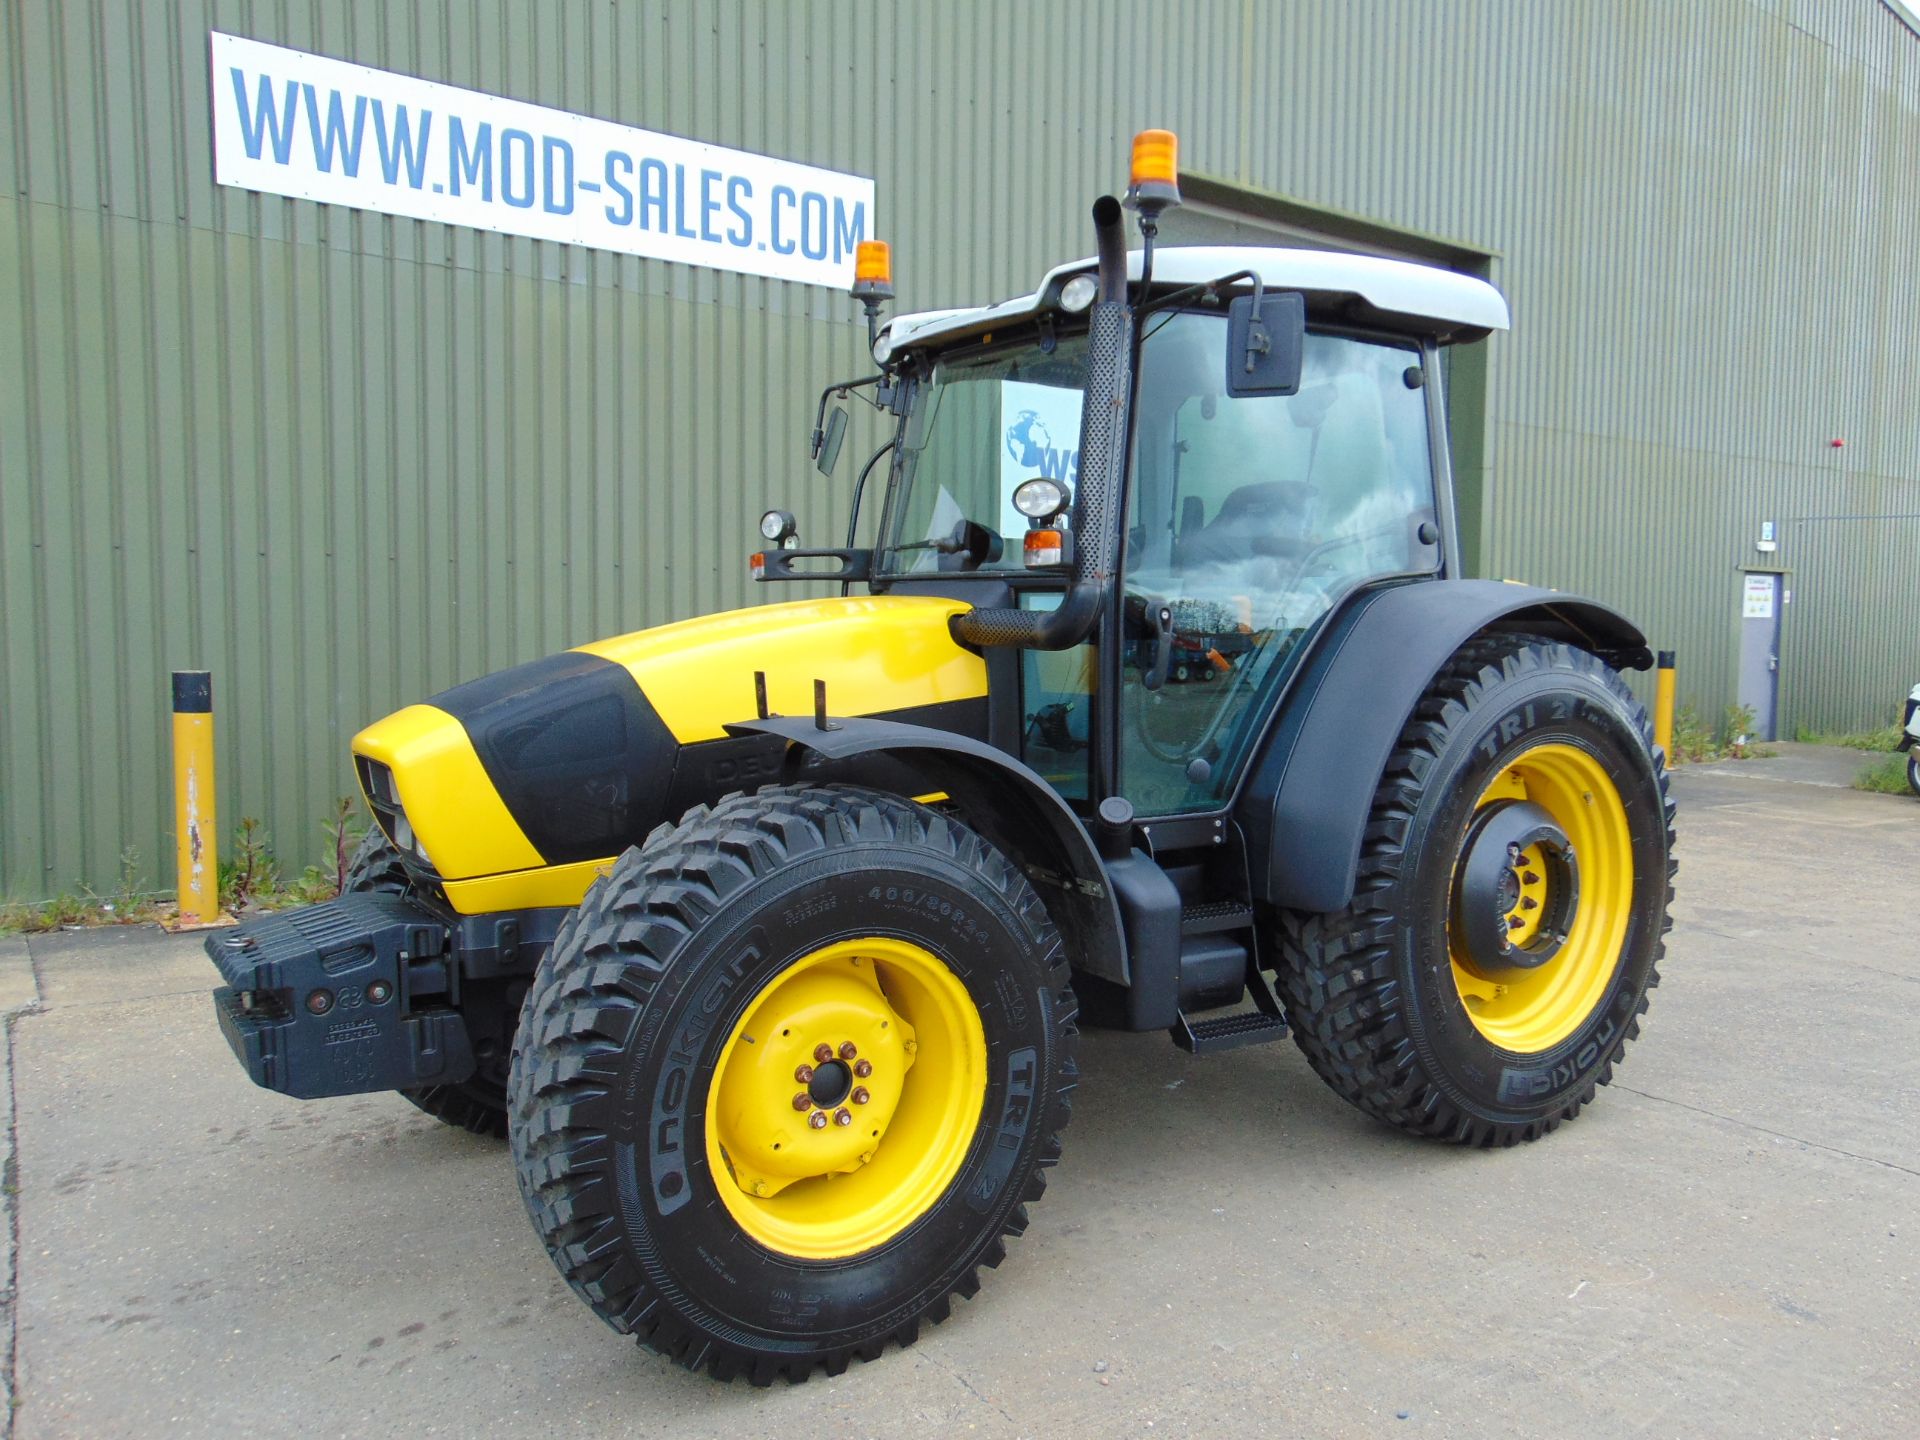 2010 Deutz-Fahr Agrofarm 420 - 4WD 97HP Agricultural Tractor 967 hrs only From MOD - Bild 4 aus 56